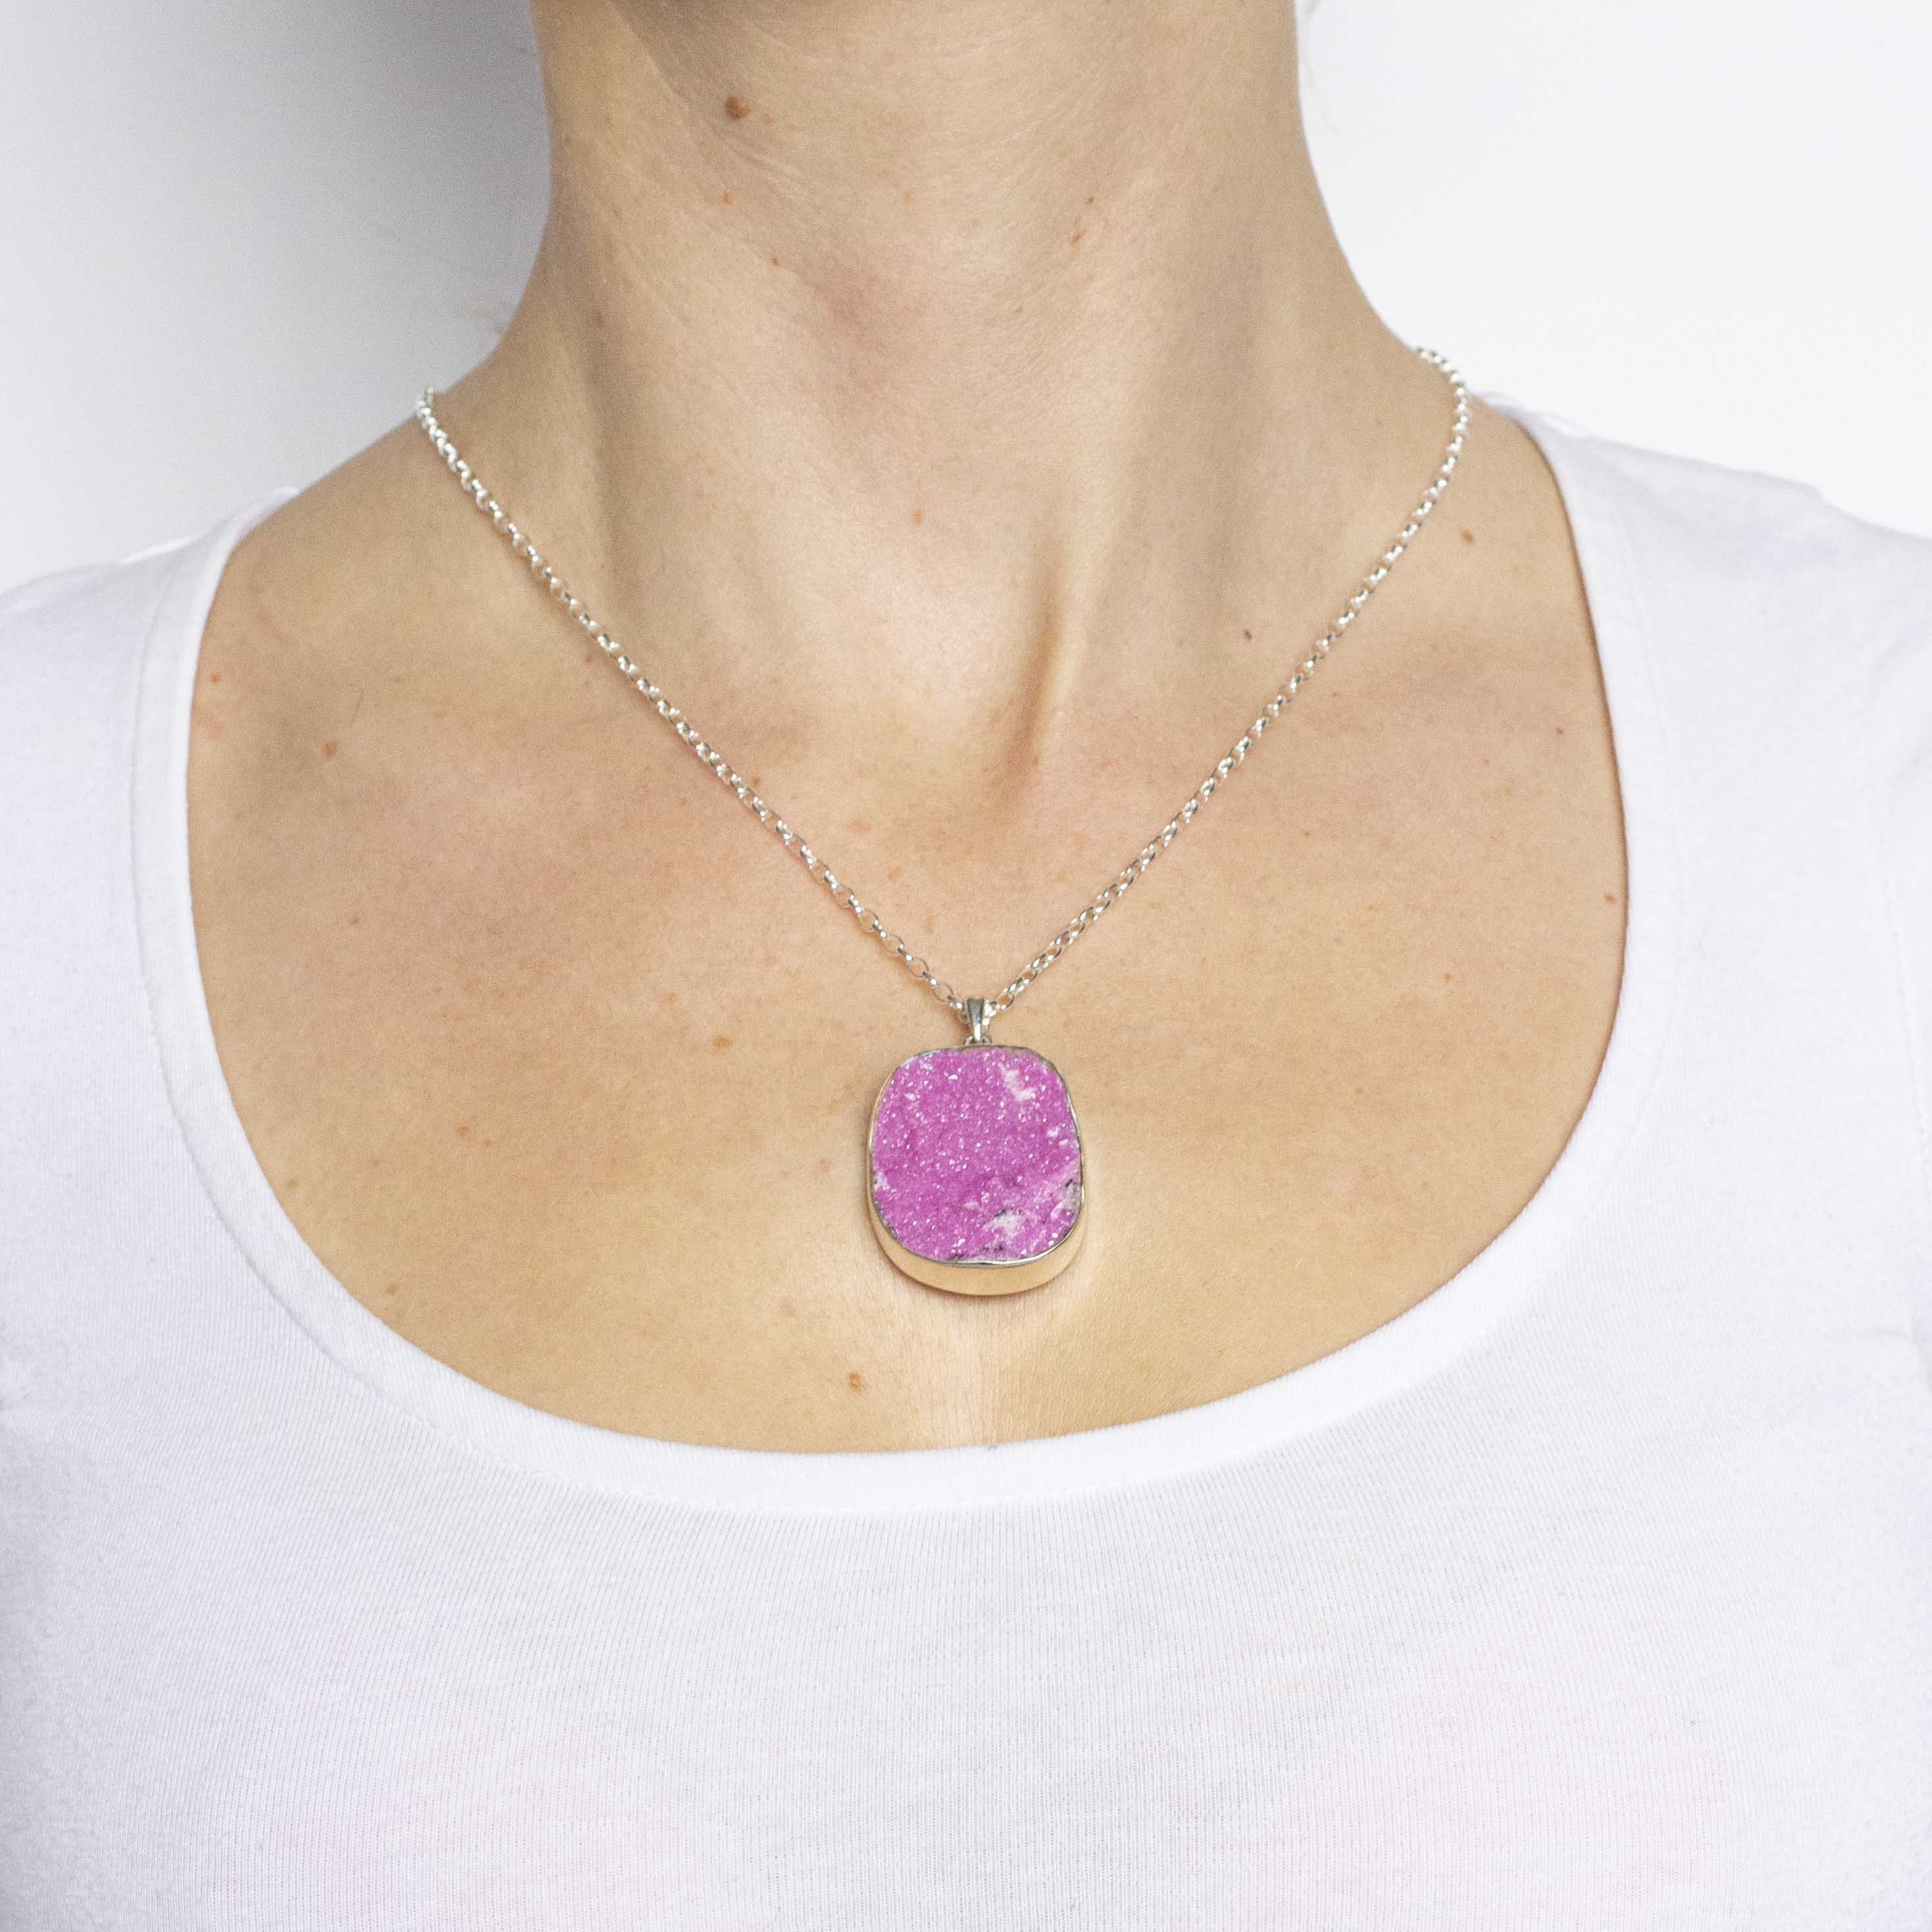 cobaltian calcite necklace pink druzy natural